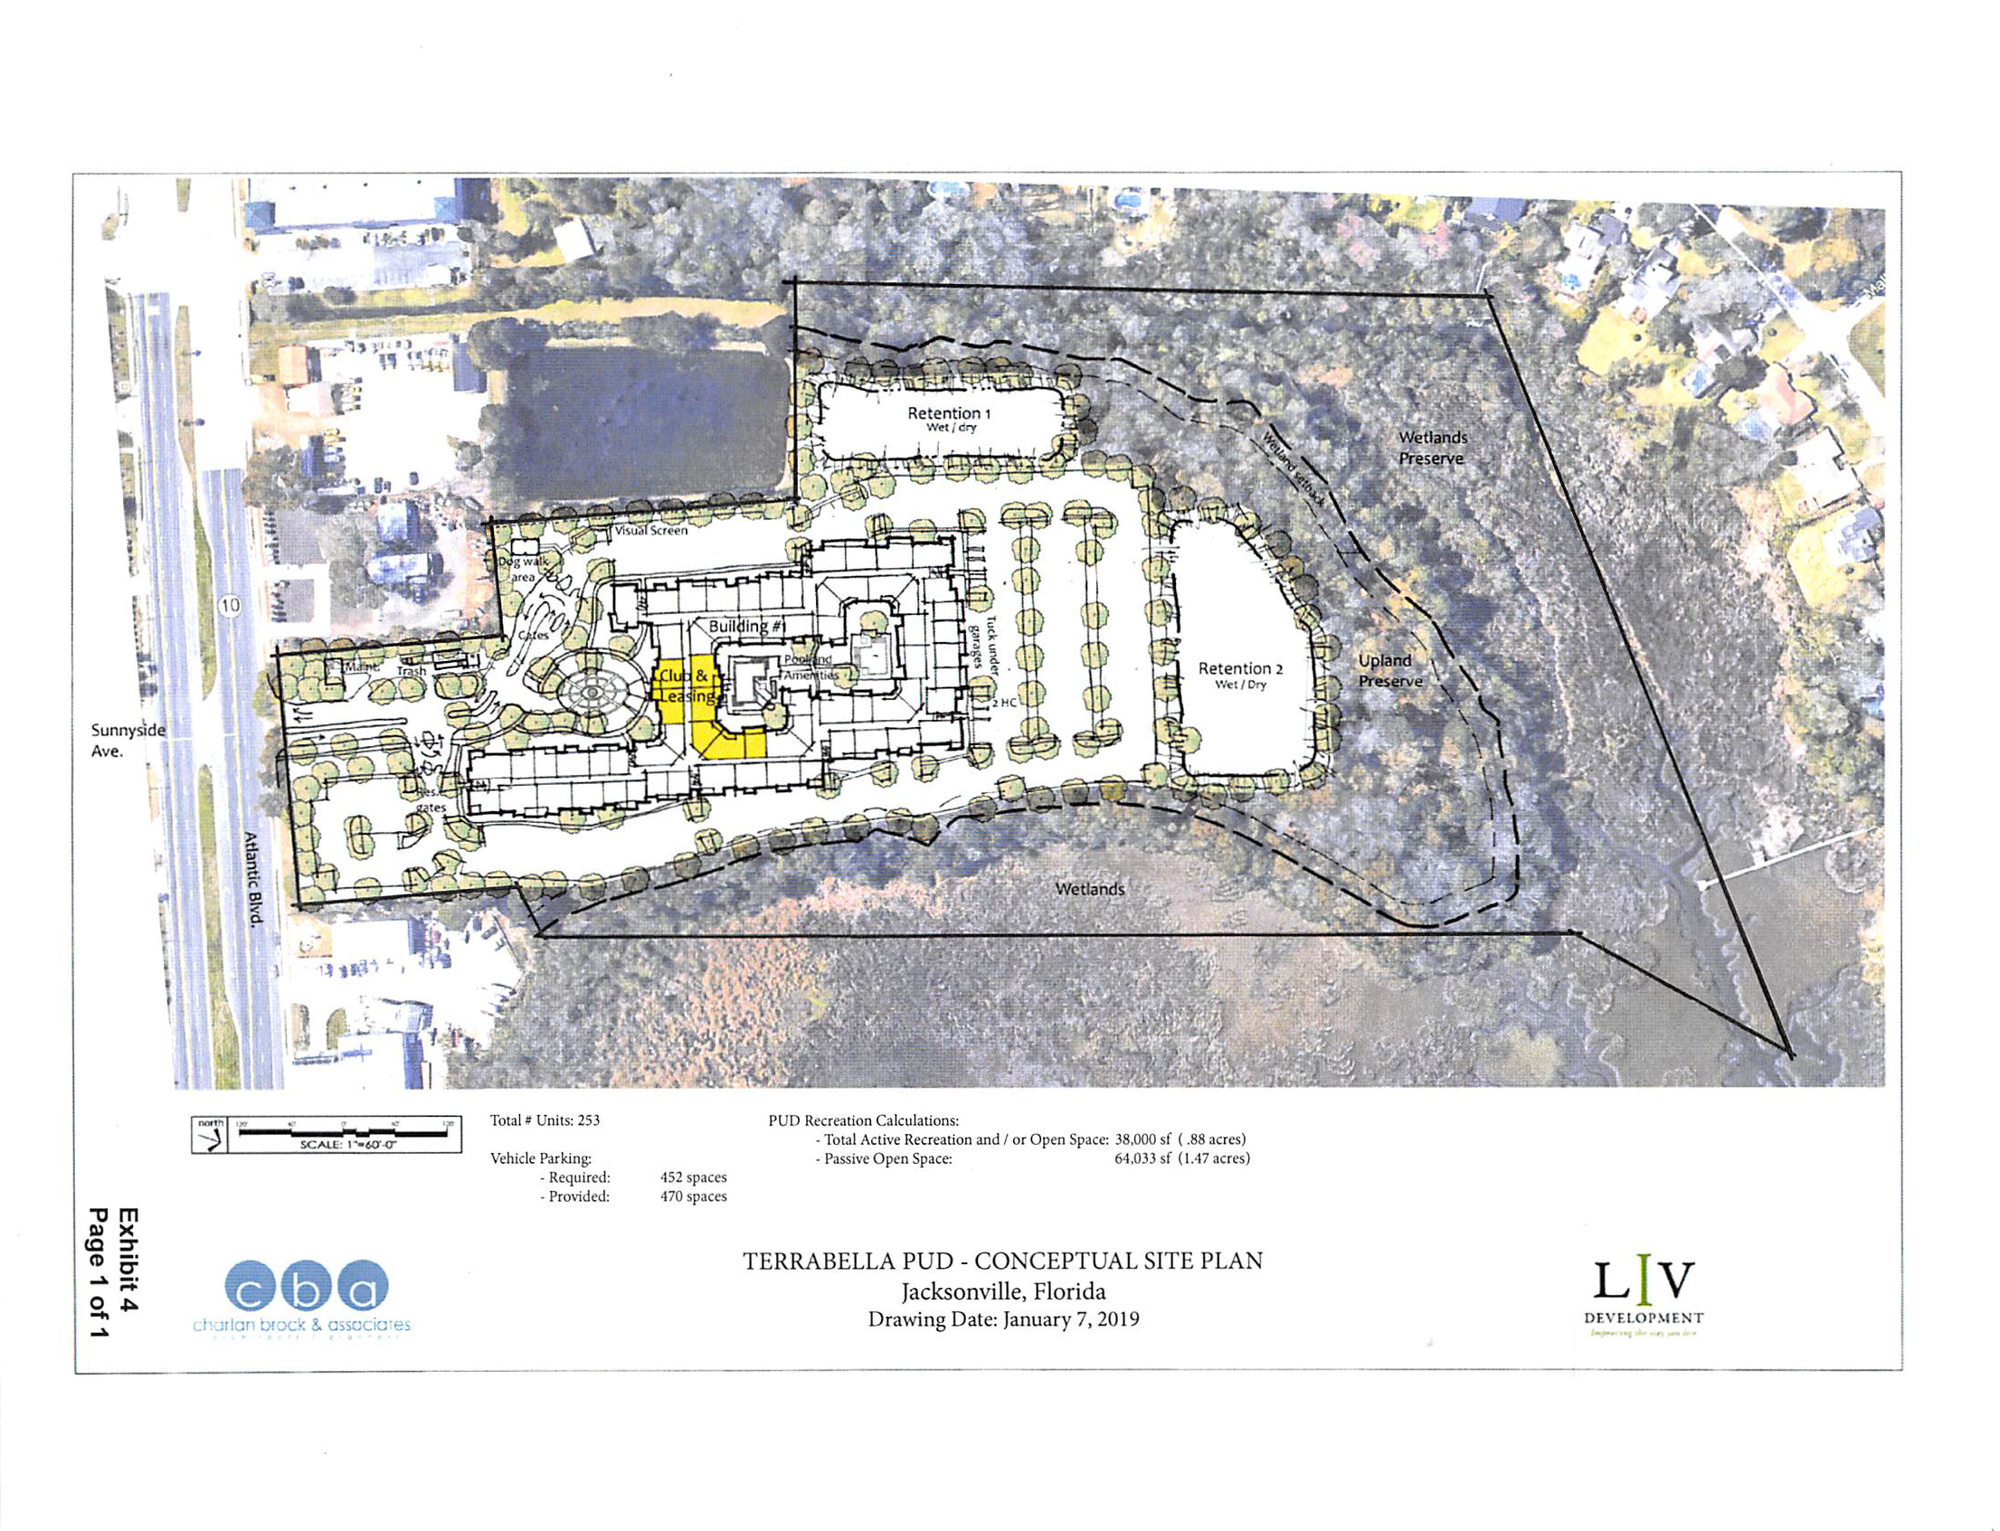 LIV Development intends to build a 253-unit apartment community at 13723 Atlantic Blvd.